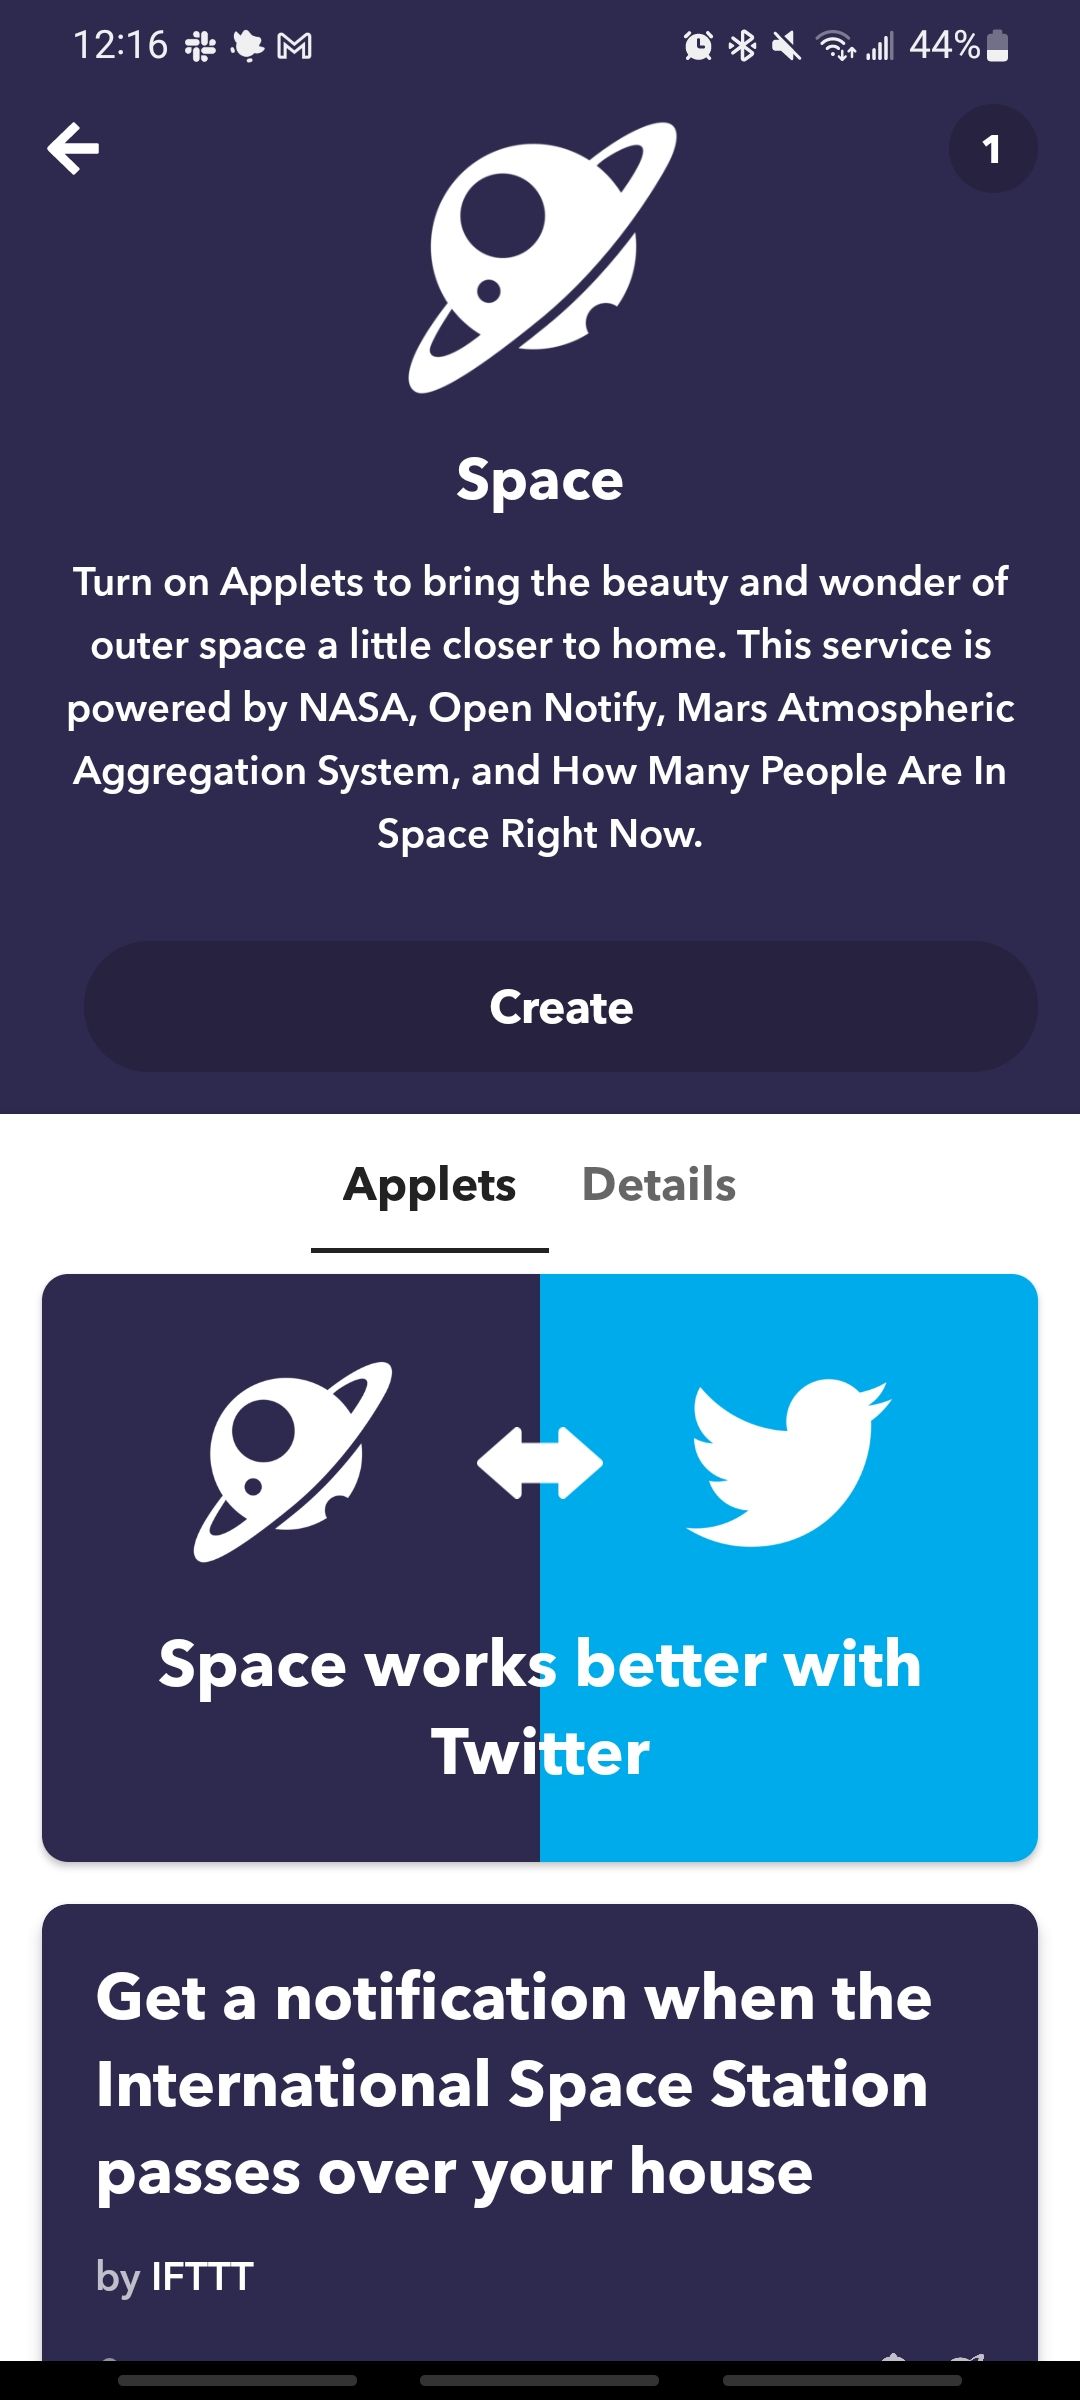 unique space applets in ifttt app